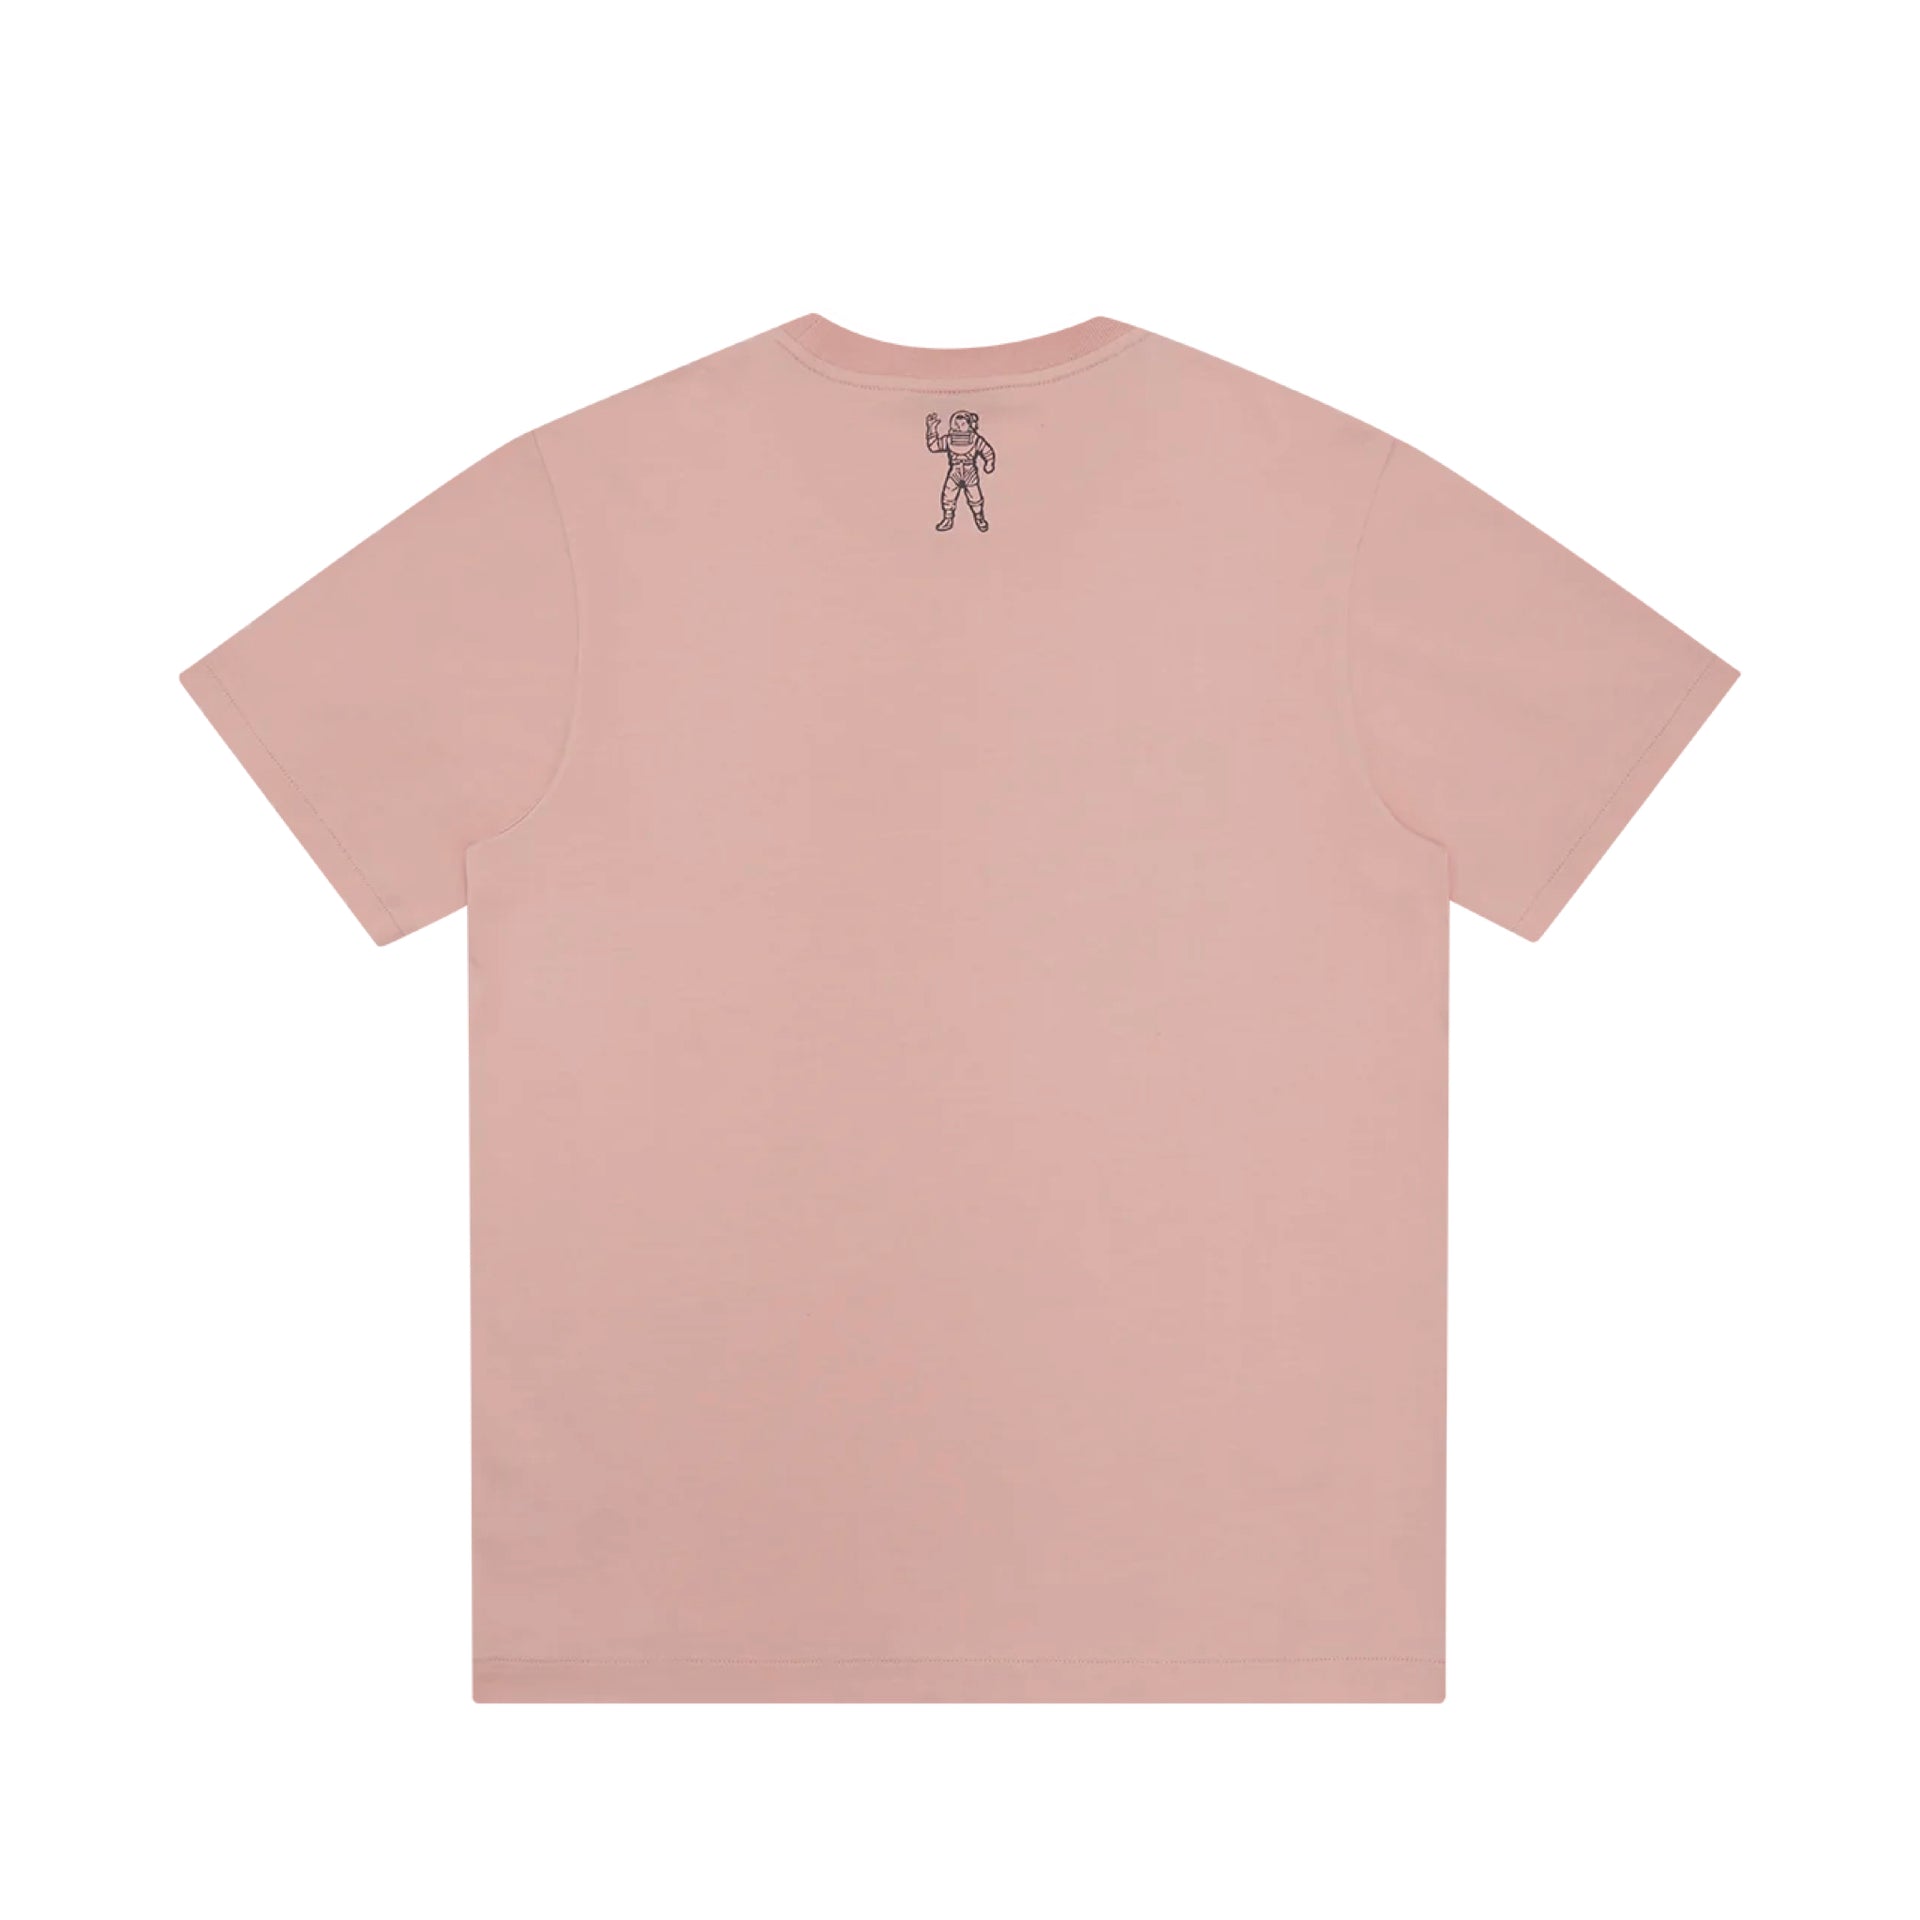 Billionaire Boys Club Camo Arch Logo T-Shirt Pink